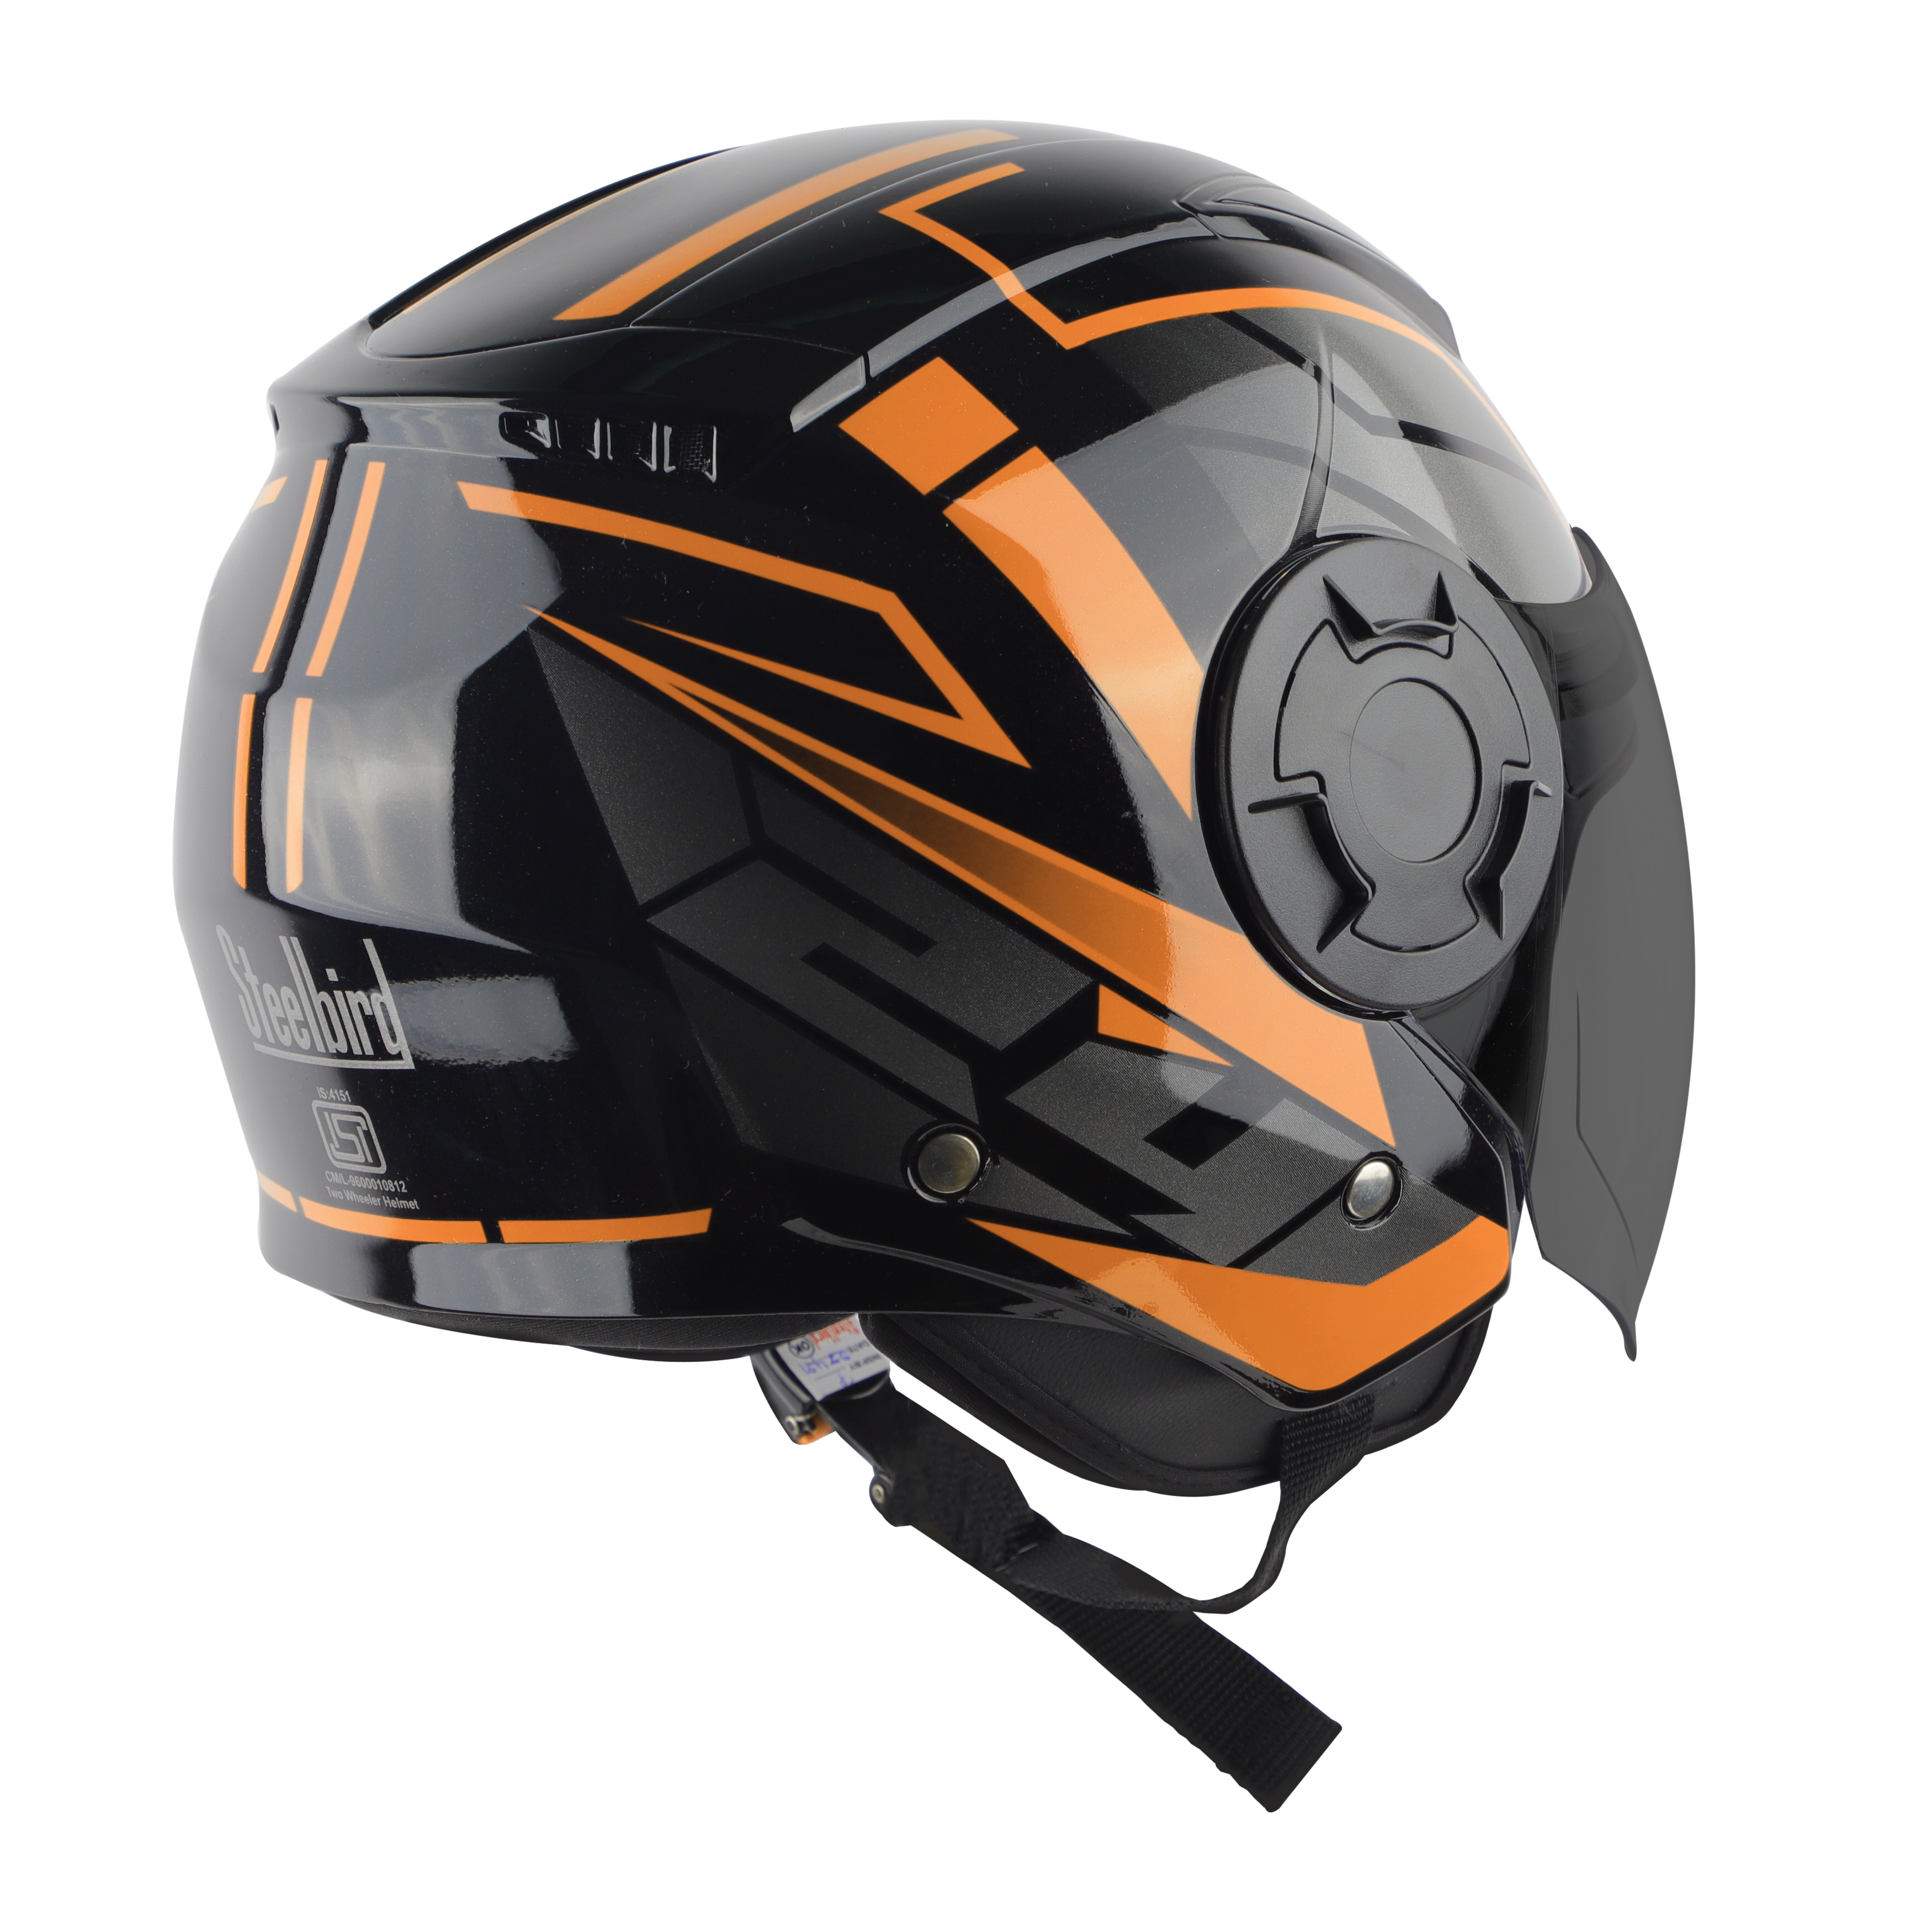 Steelbird SBH-31 Baron ISI Certified Open Face Helmet For Men And Women (Glossy Black Orange With Smoke Visor)